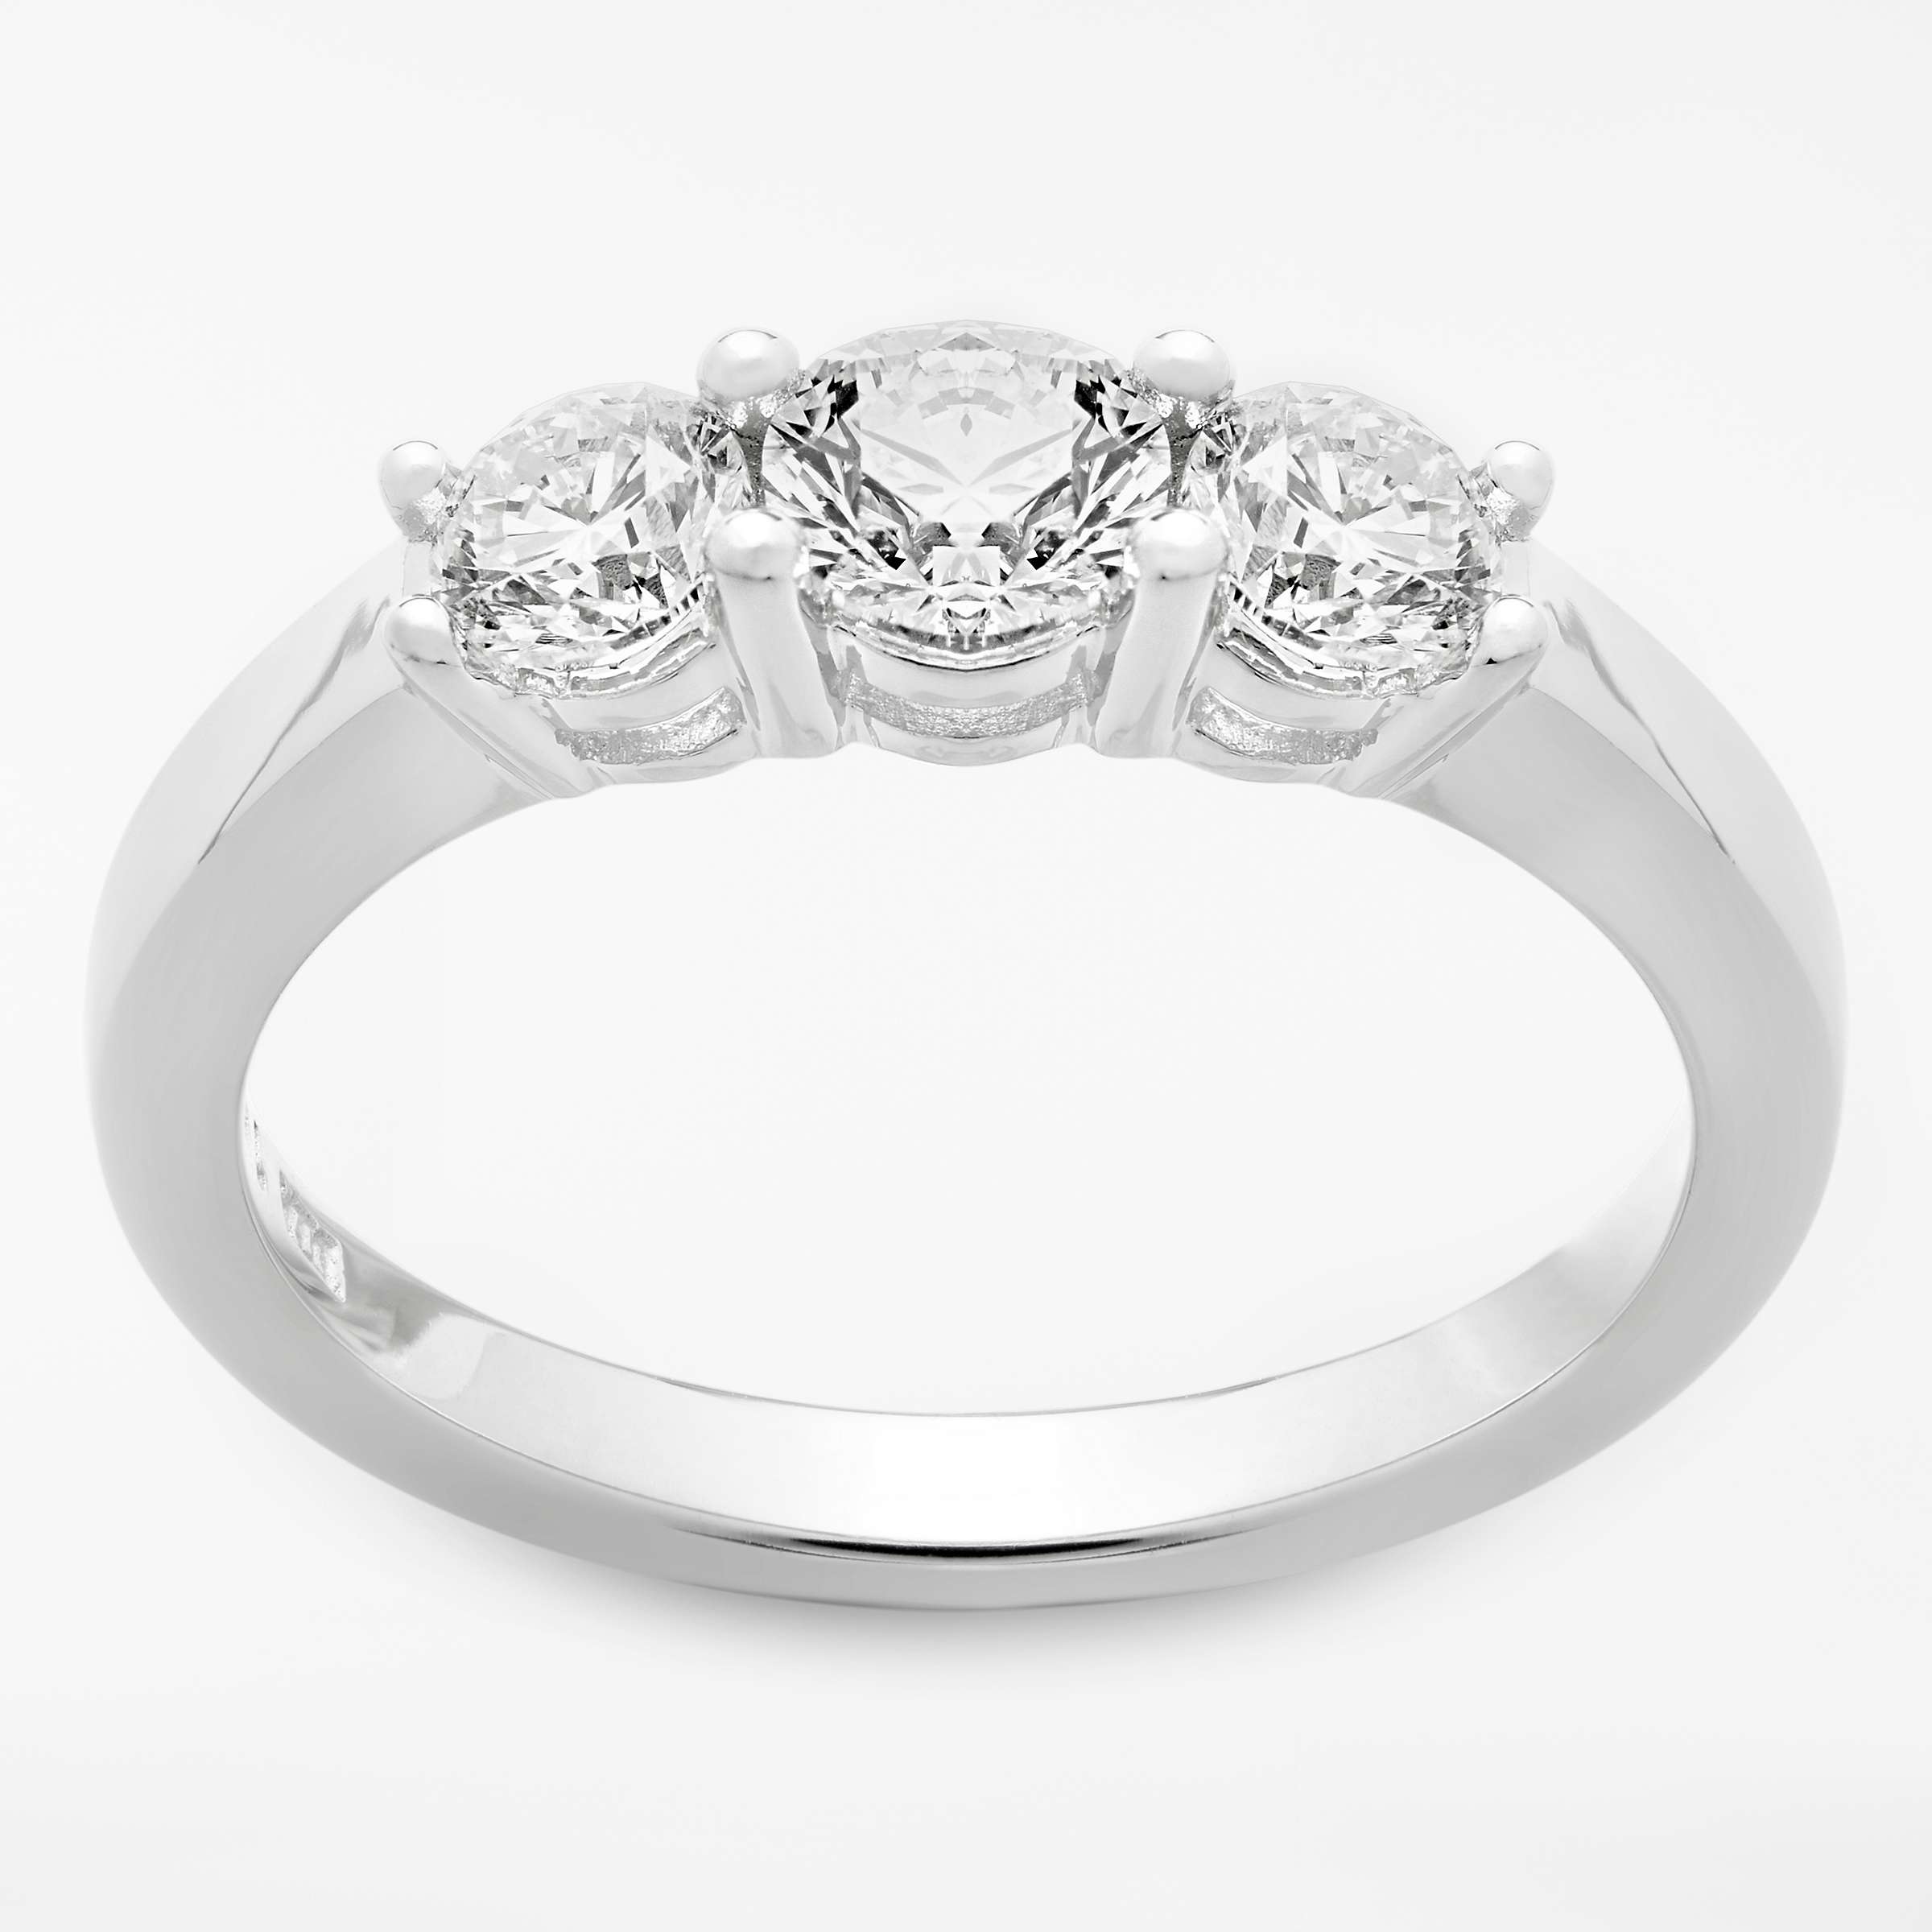 Buy Mogul 18ct White Gold Round Brilliant Diamond Trilogy Engagement Ring, 1ct Online at johnlewis.com